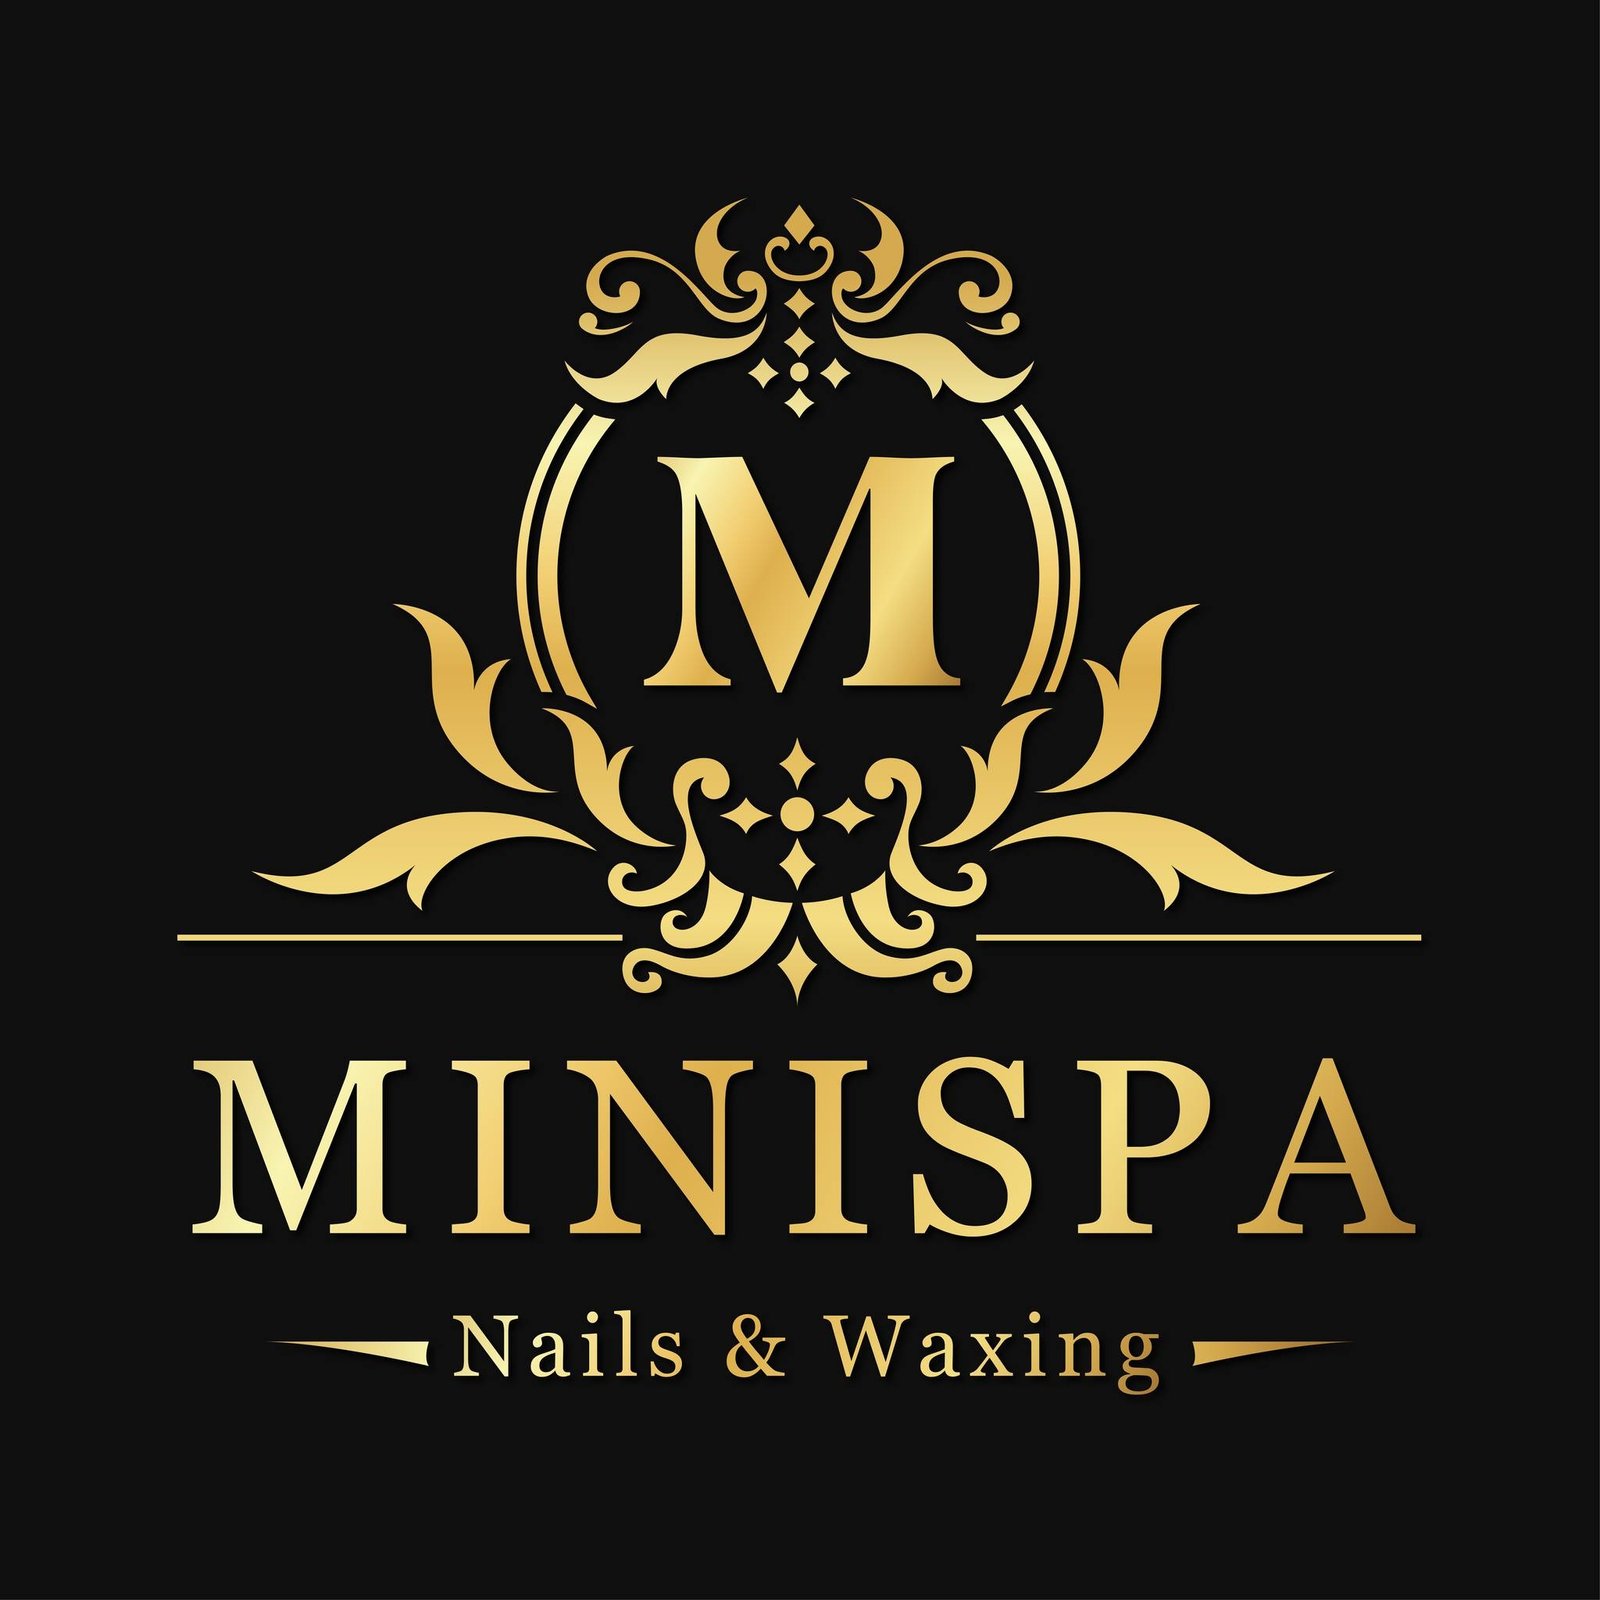 Minispa Nails & Waxing 